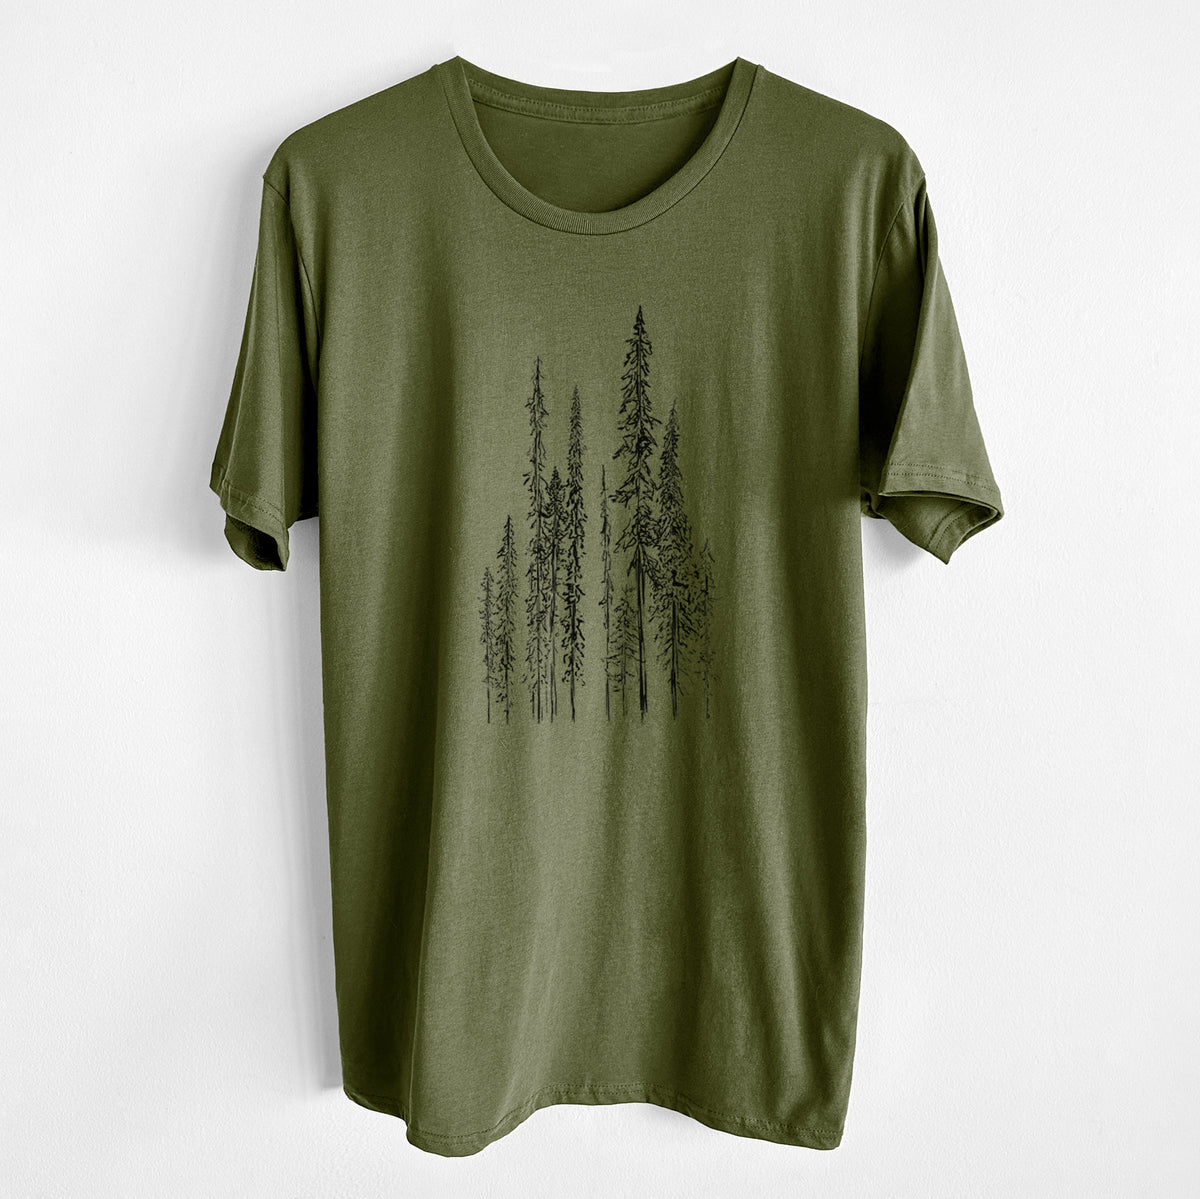 Black Spruce (Picea mariana) - Unisex Crewneck - Made in USA - 100% Organic Cotton